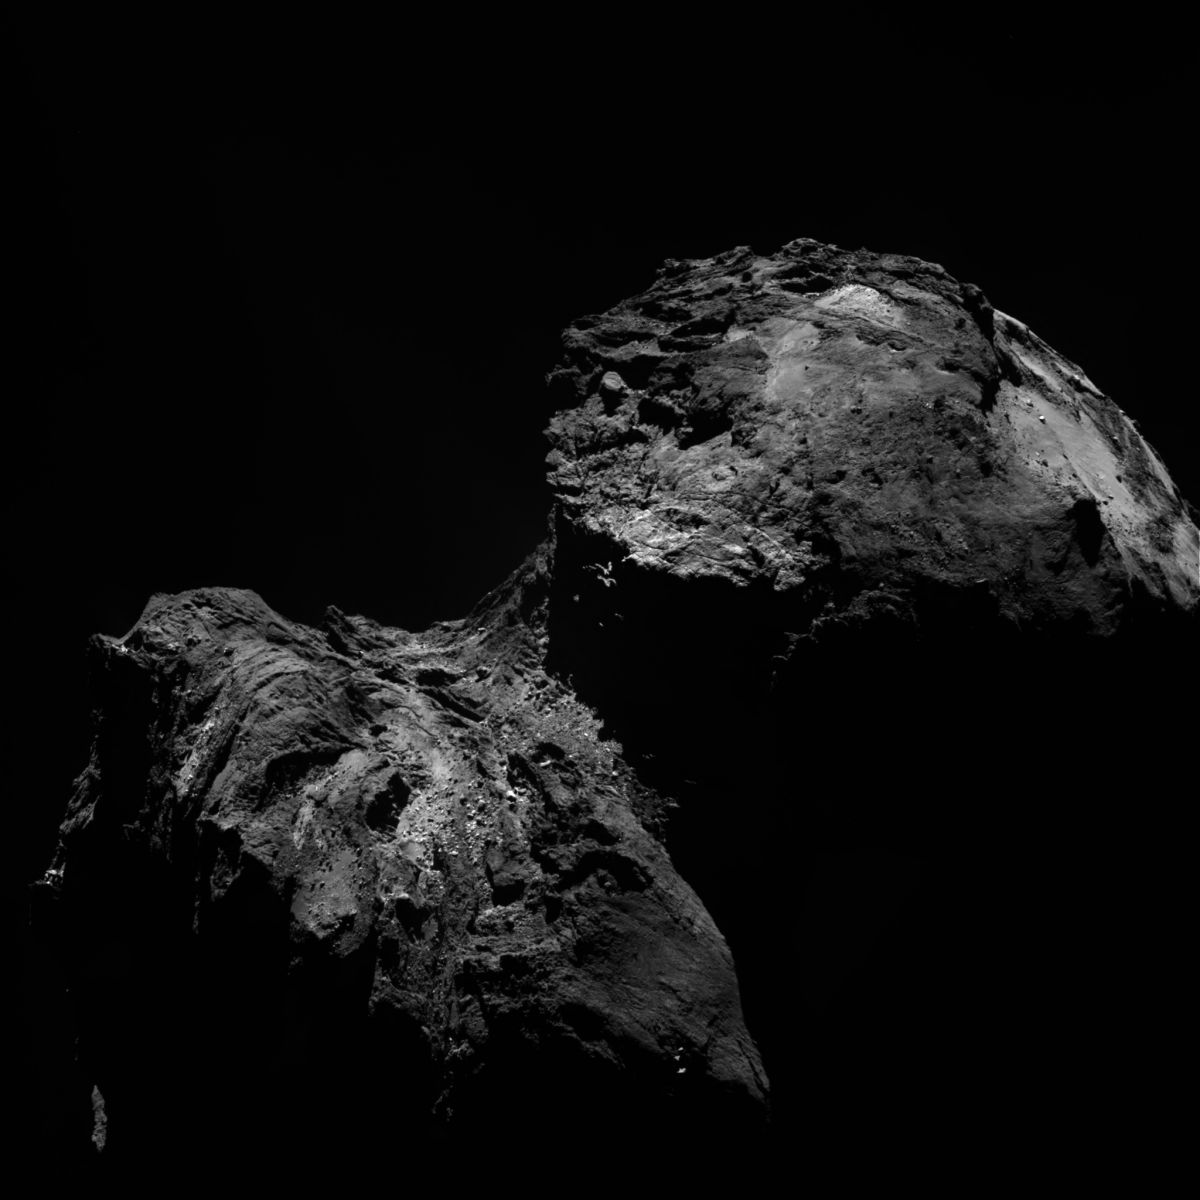 Comet on 10 December 2015 from OSIRIS narrow angle camera